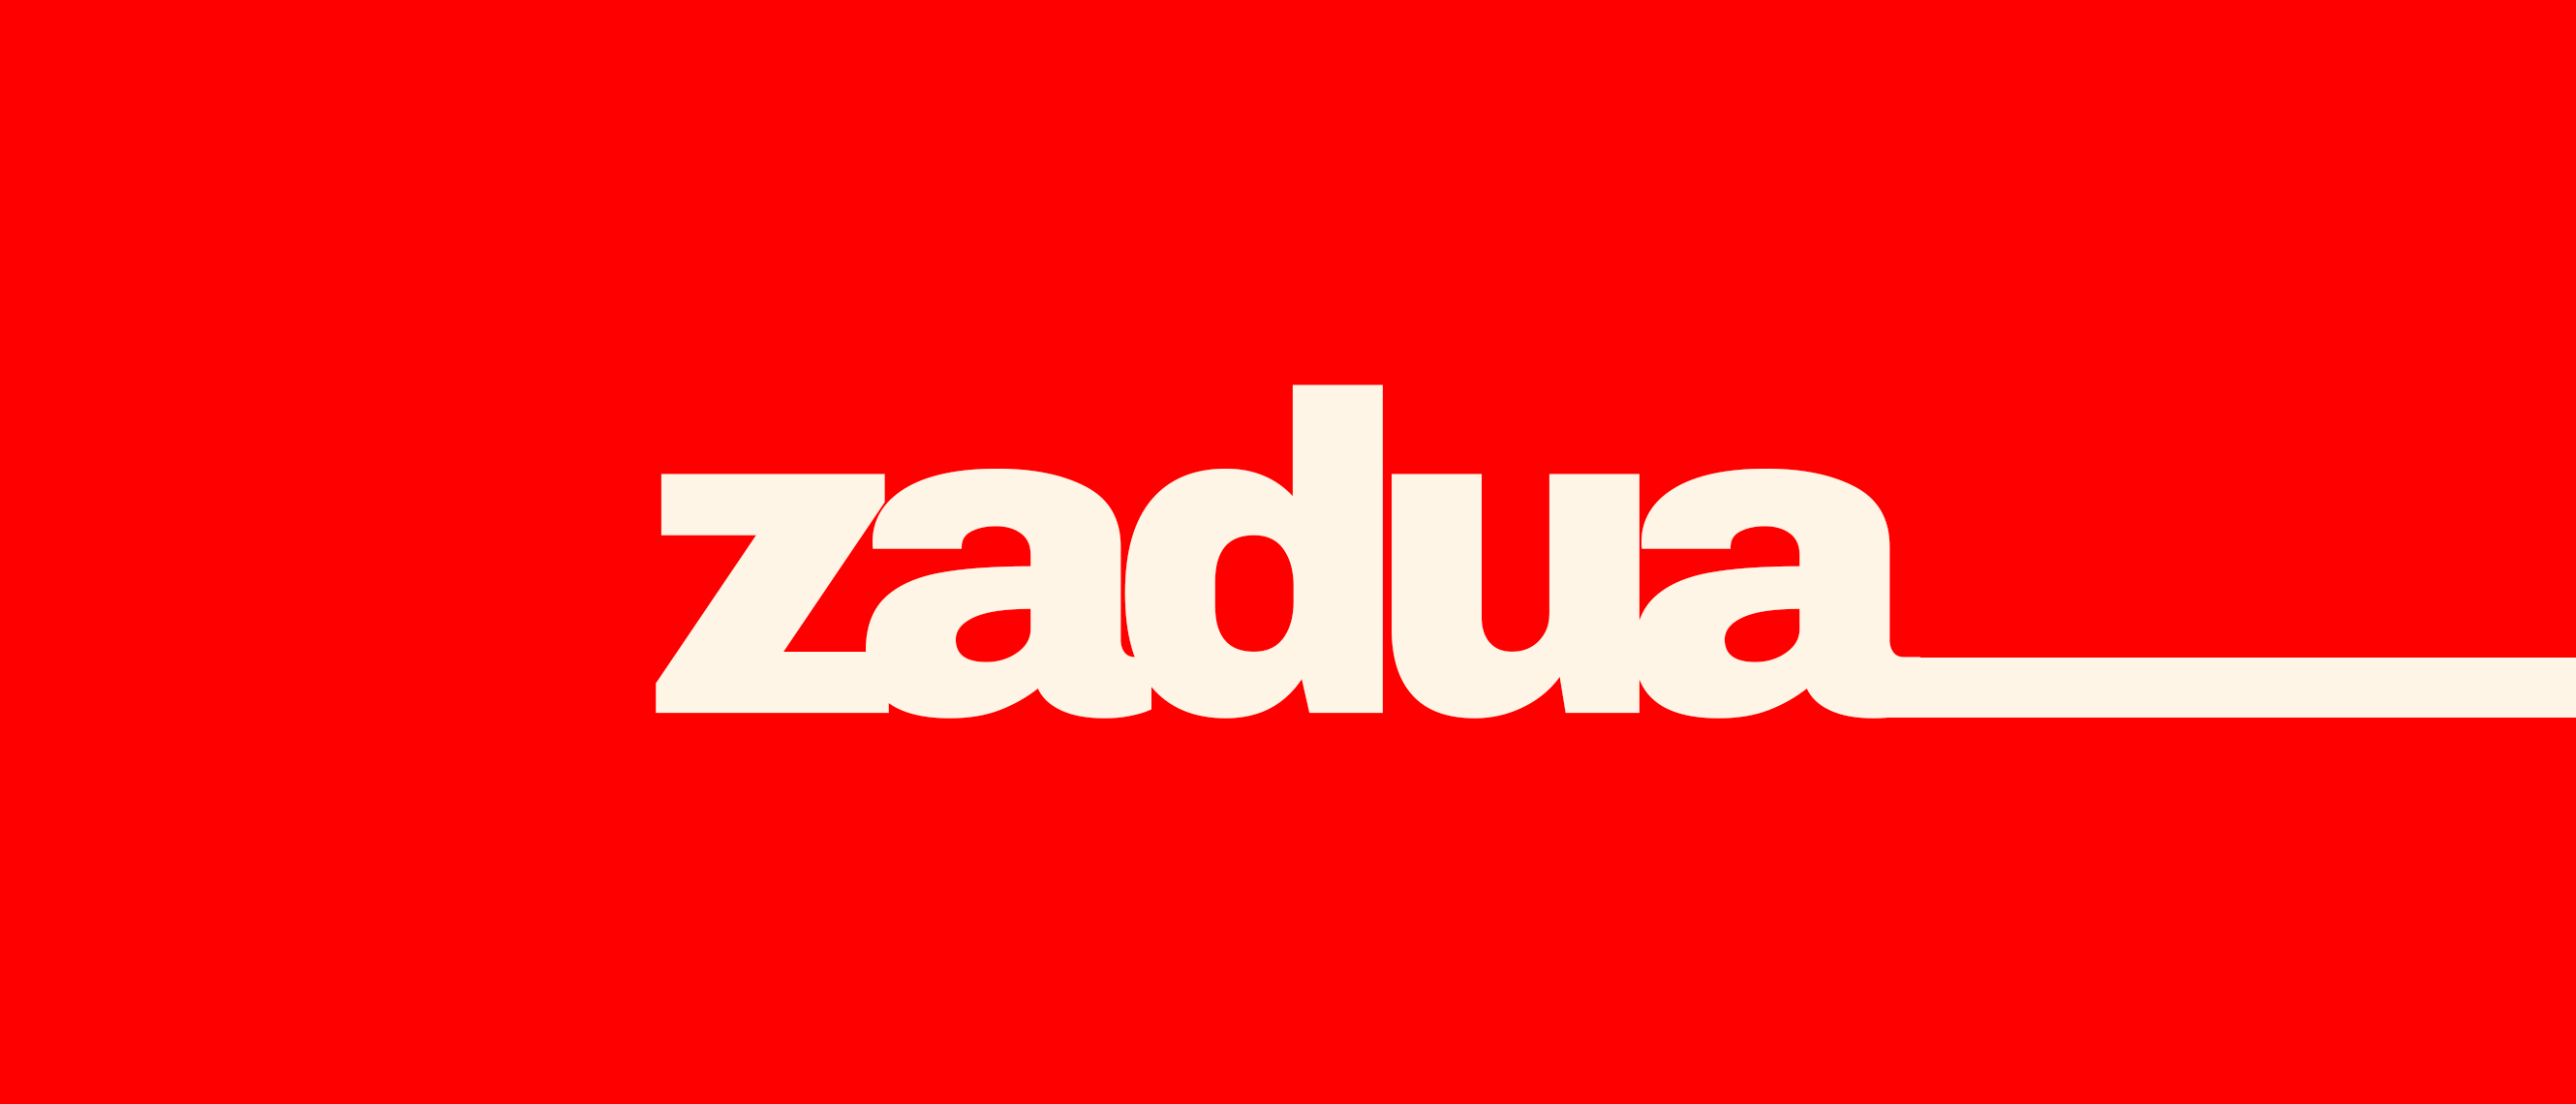 Zadua anuncia seu single de estréia: “DISSONIA”